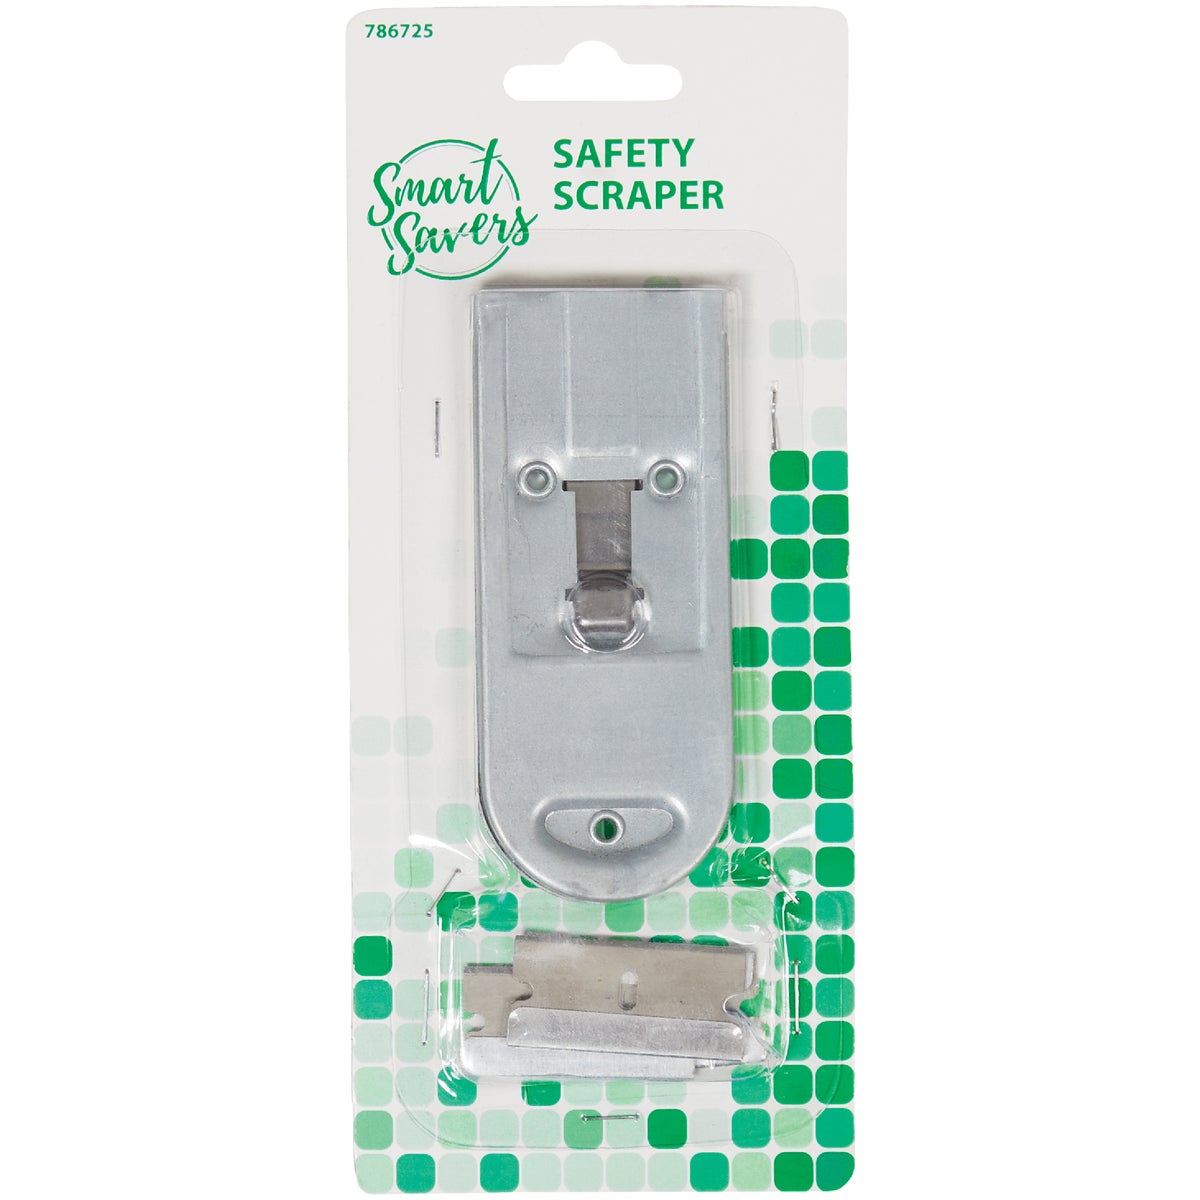 Item 786725, Smart Savers safety scraper.